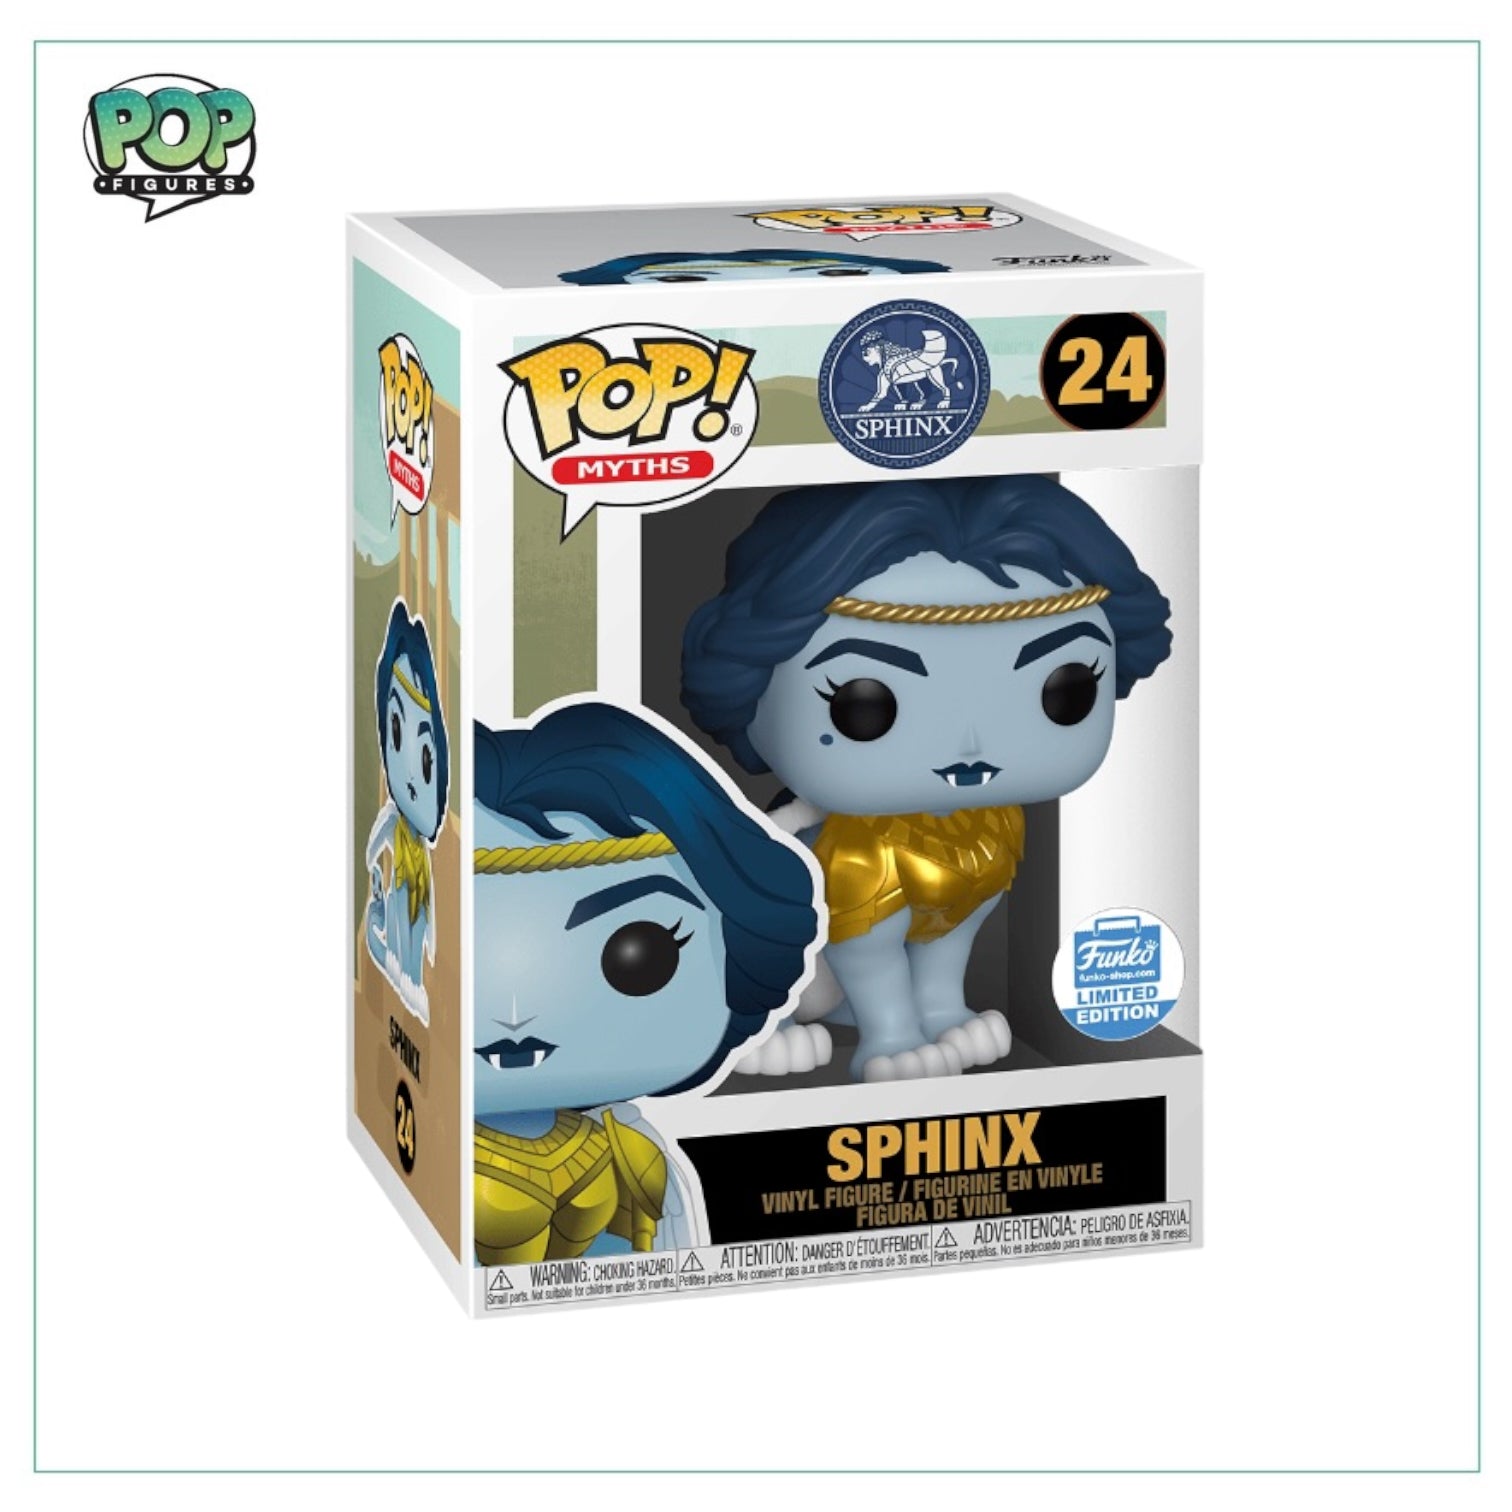 Sphinx # 24 Funko Pop! - Myths - Funko Shop Exclusive - 2020 Pop- Condition 9/10